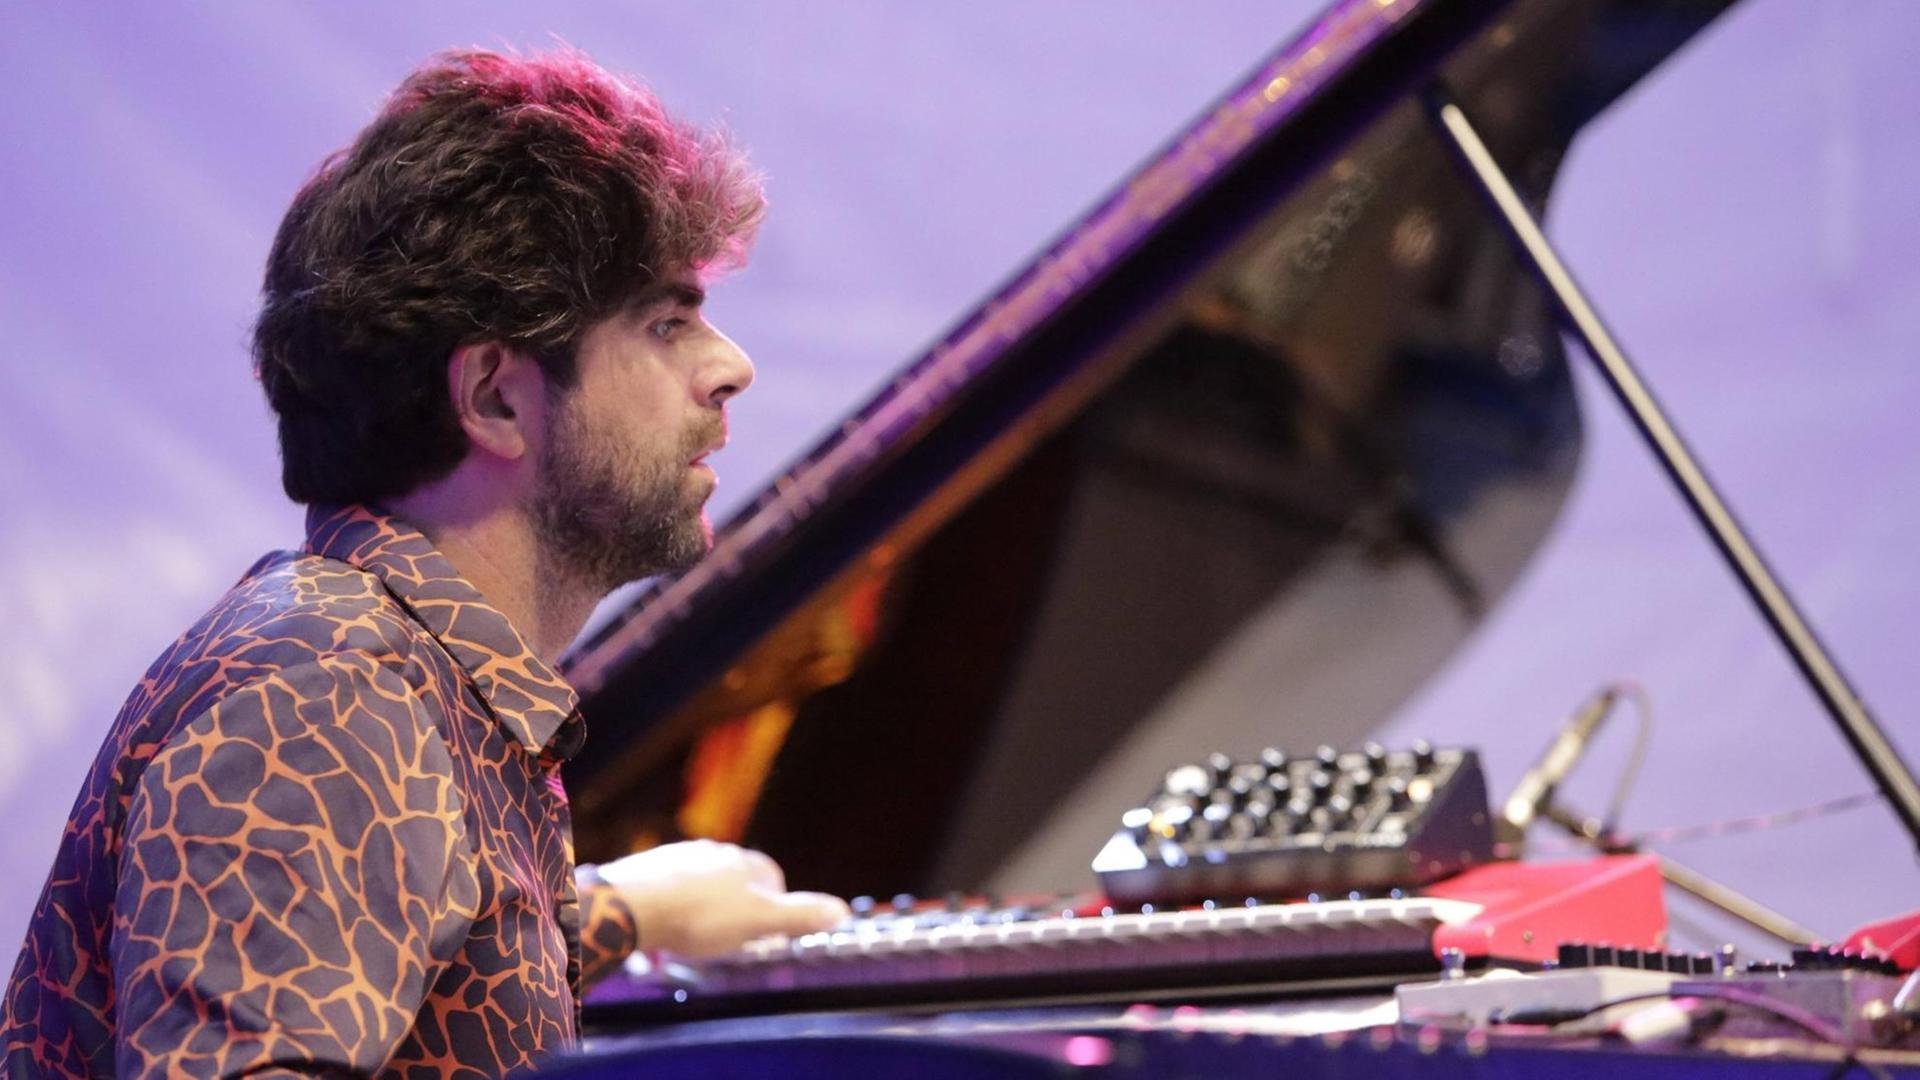 Der Pianist Benjamin Moussay vom Louis Sclavis Atlas Trio beim "Jazz and Joy Festival" 2014 in Worms.